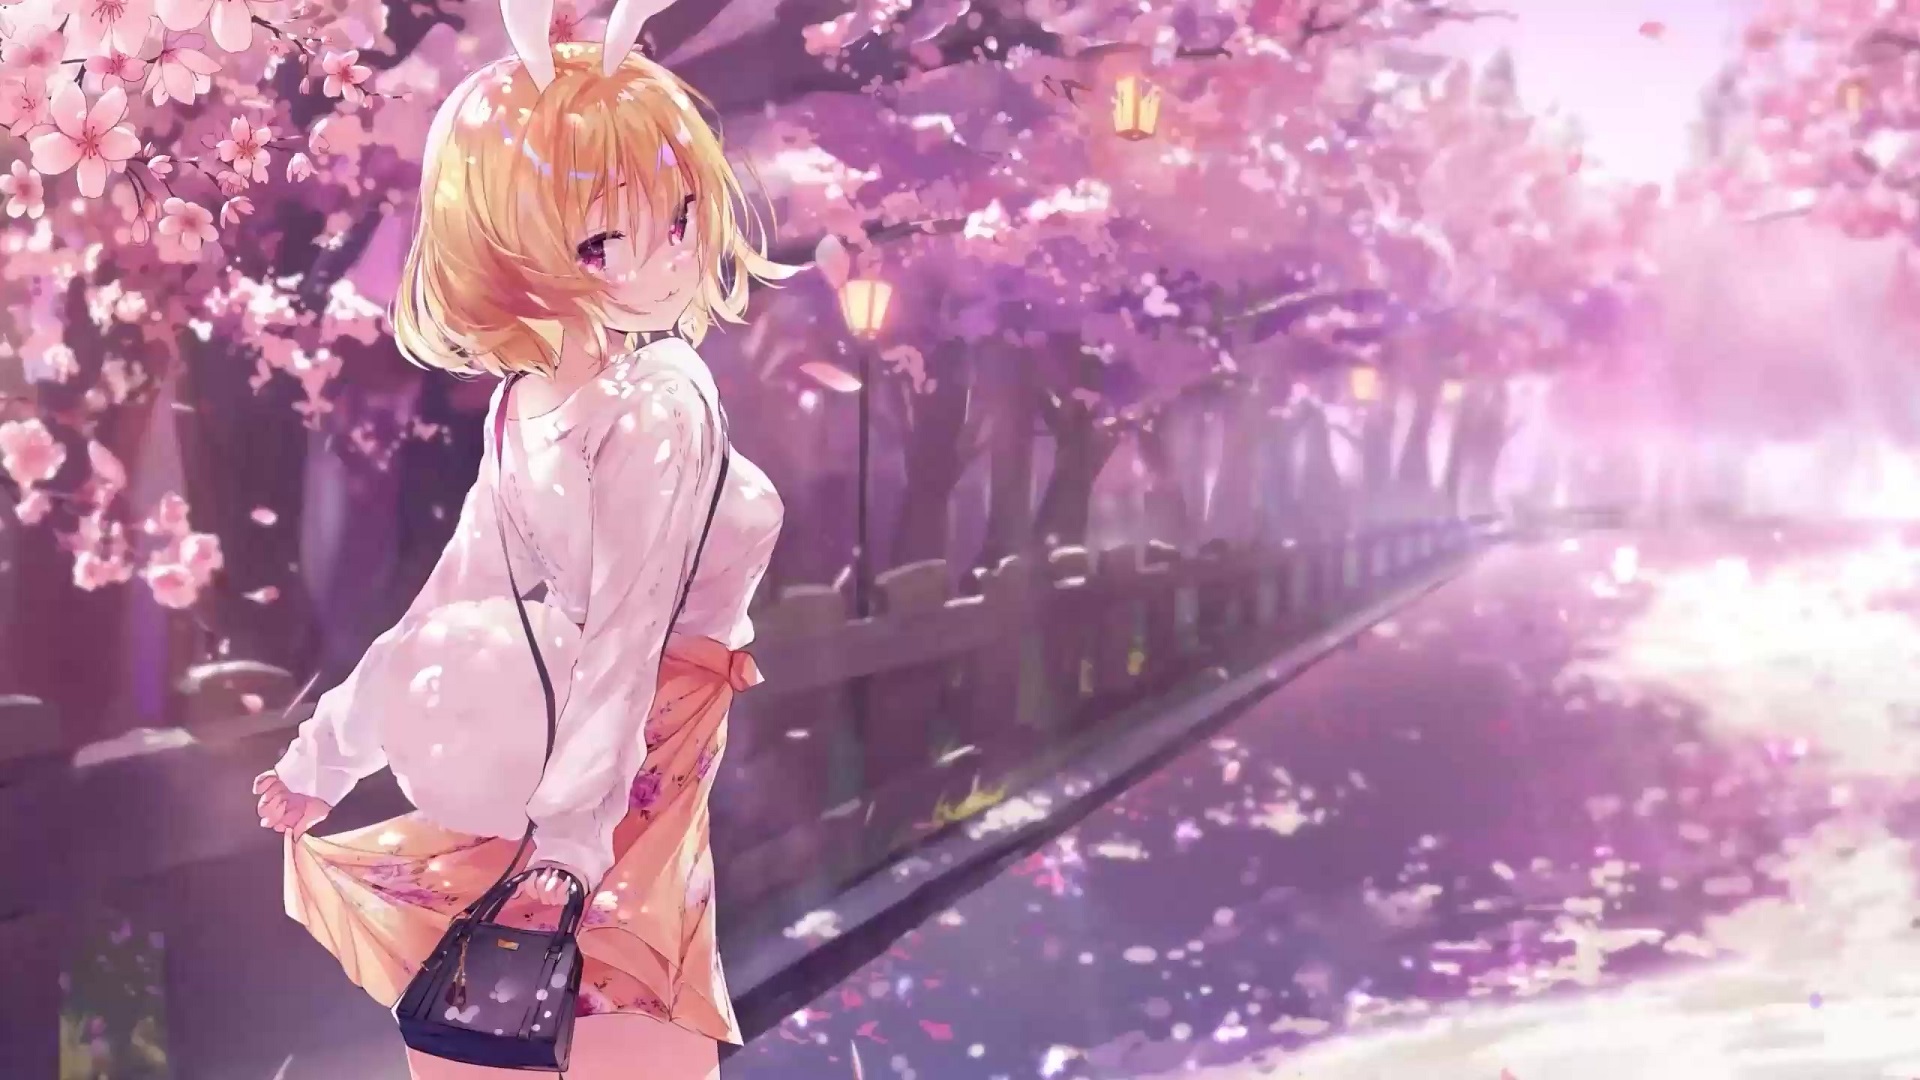 Anime Bunny Girl With Sakura Blossom Live Wallpaper - MoeWalls